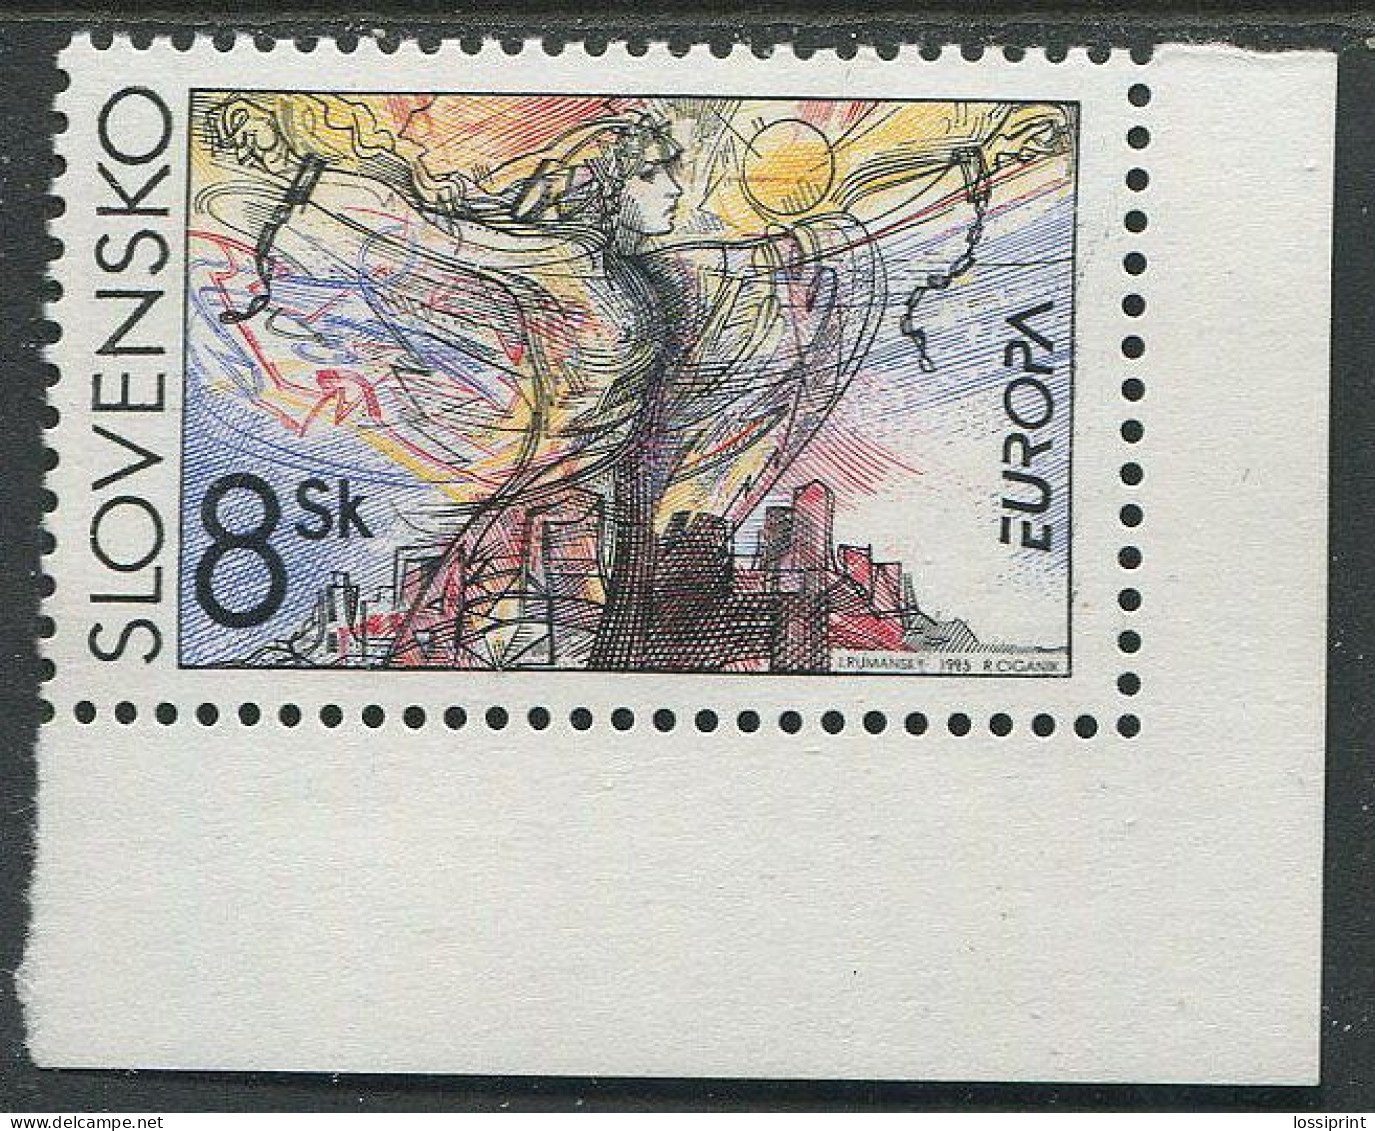 Slovakia:Unused Stamp EUROPA Cept 1995, MNH, Corner - 1995